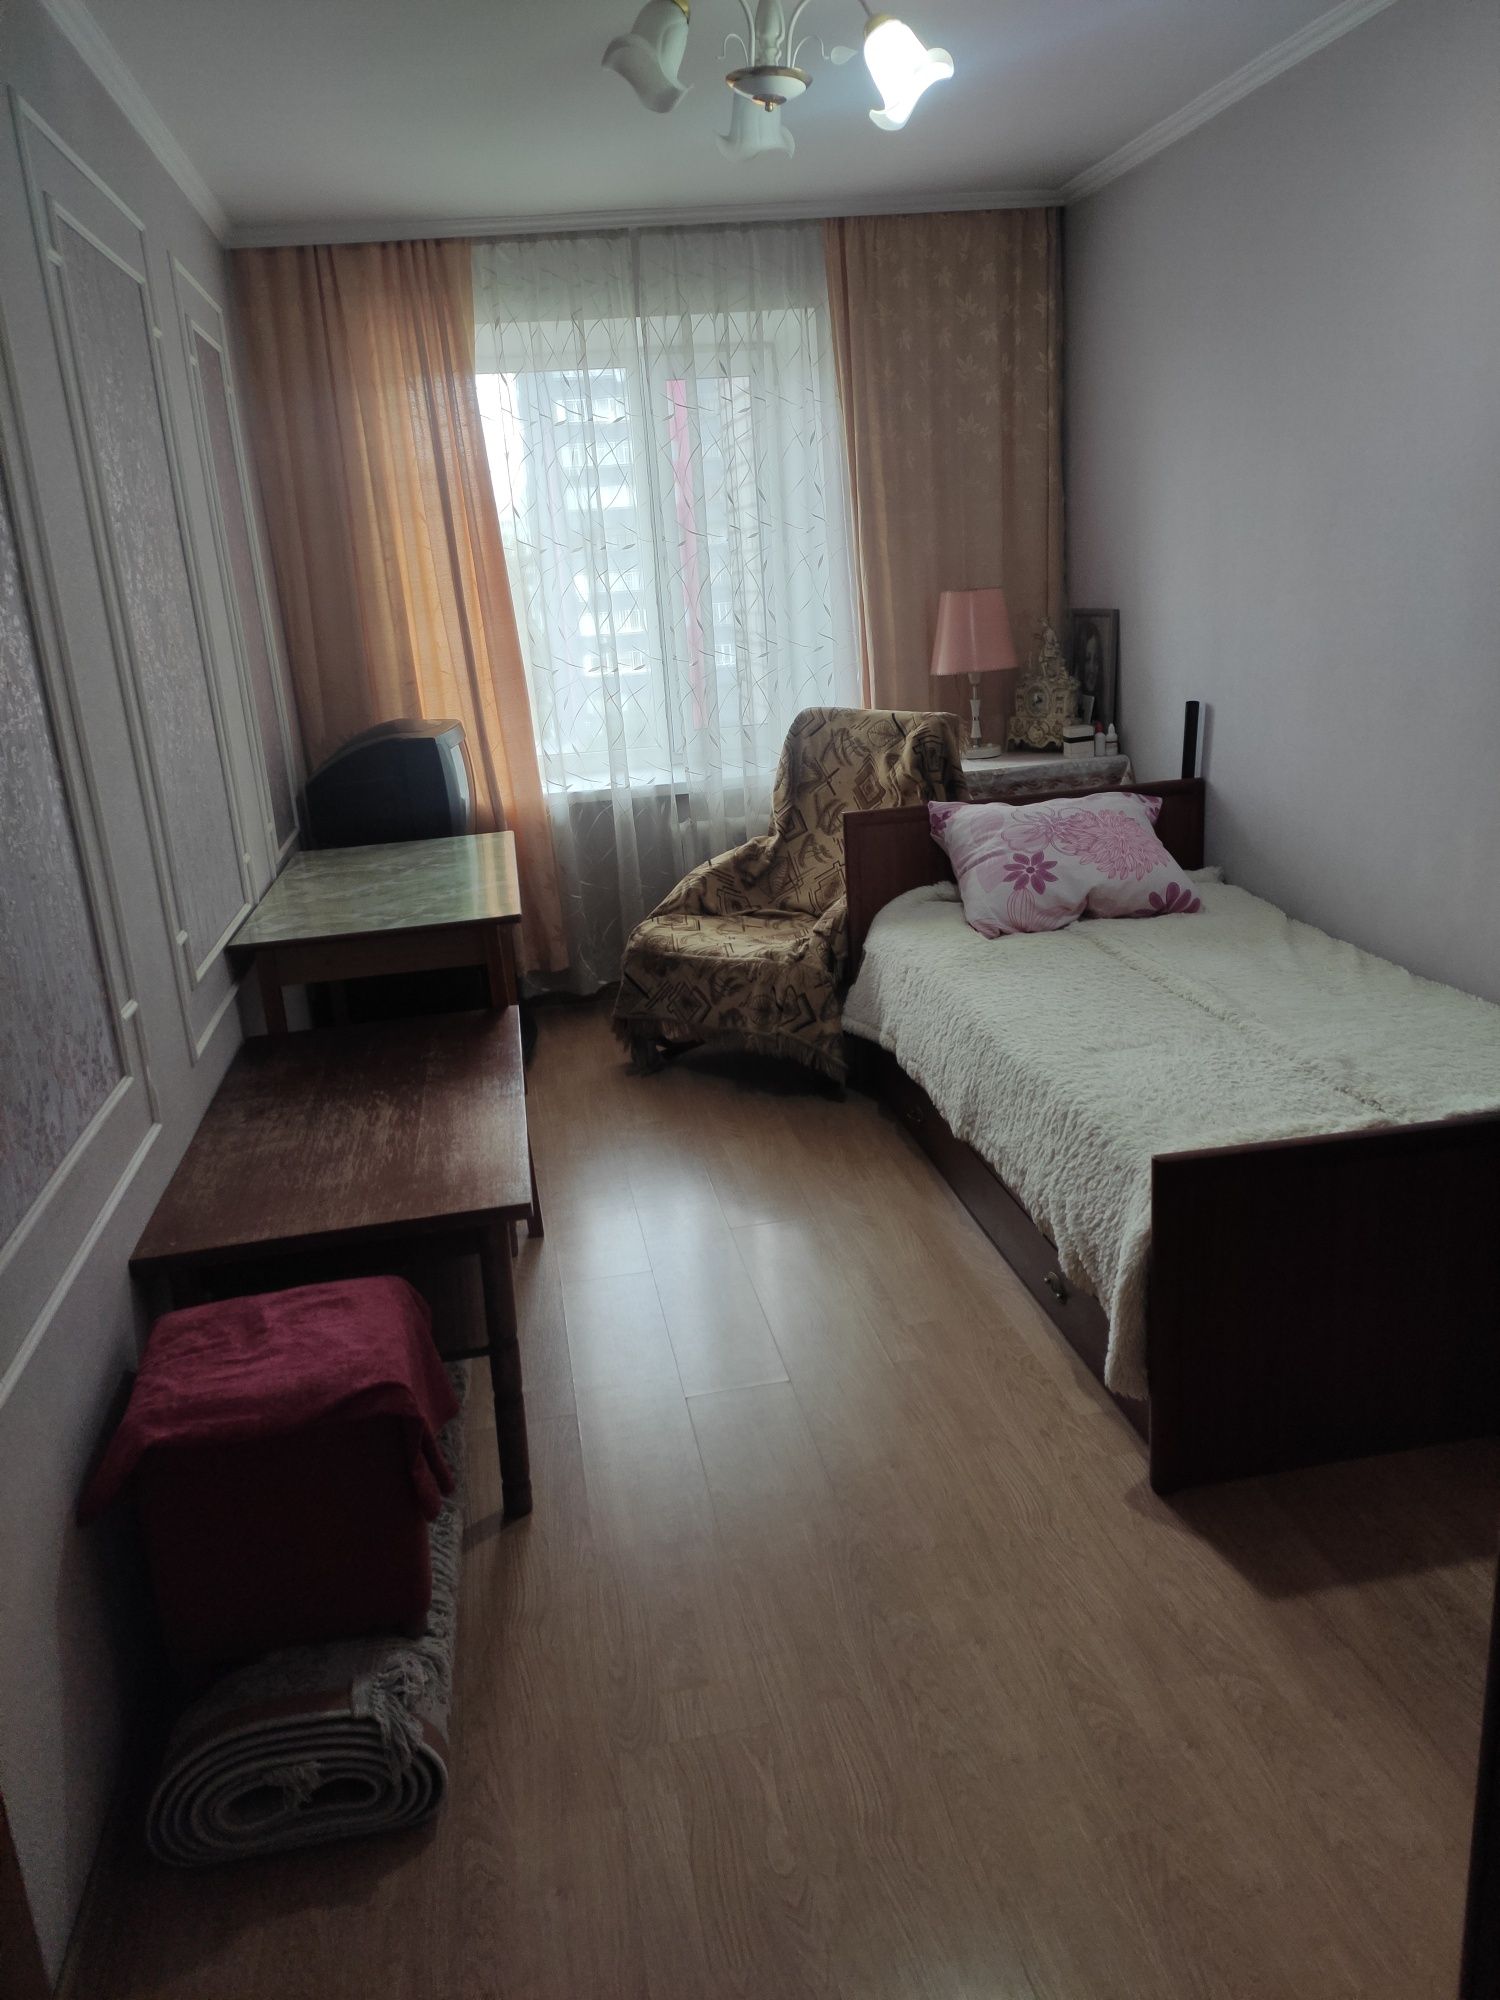 Продается 3-х комнатная квартира в кирпичном доме по пр. Шакарима 42